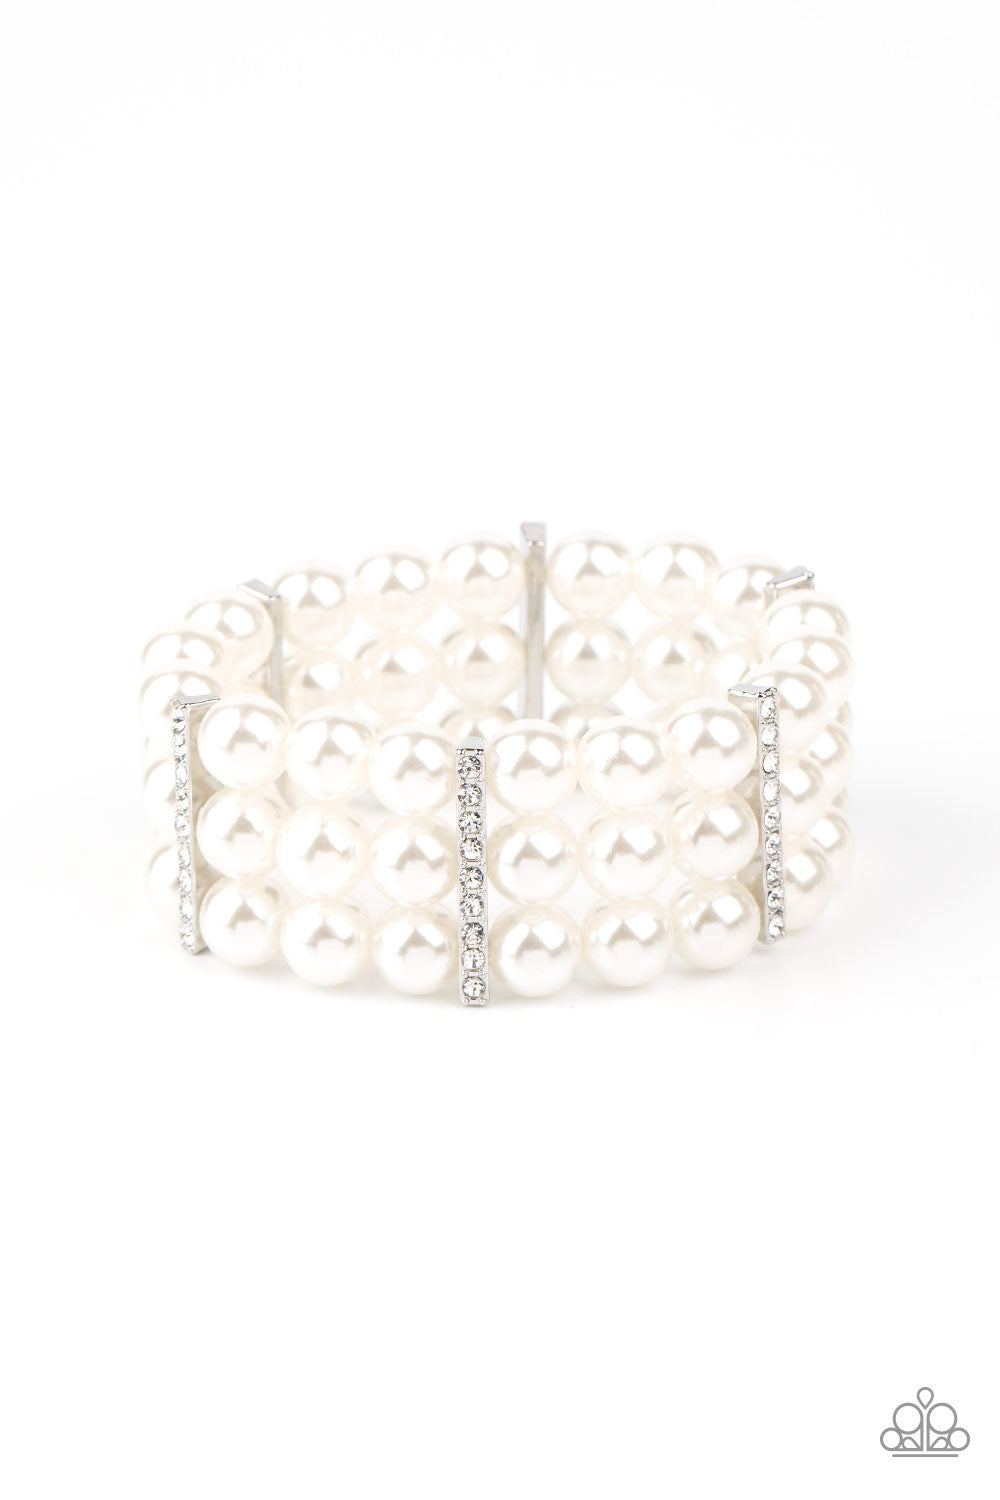 Modern Day Majesty White Pearl Bracelet - Paparazzi Accessories